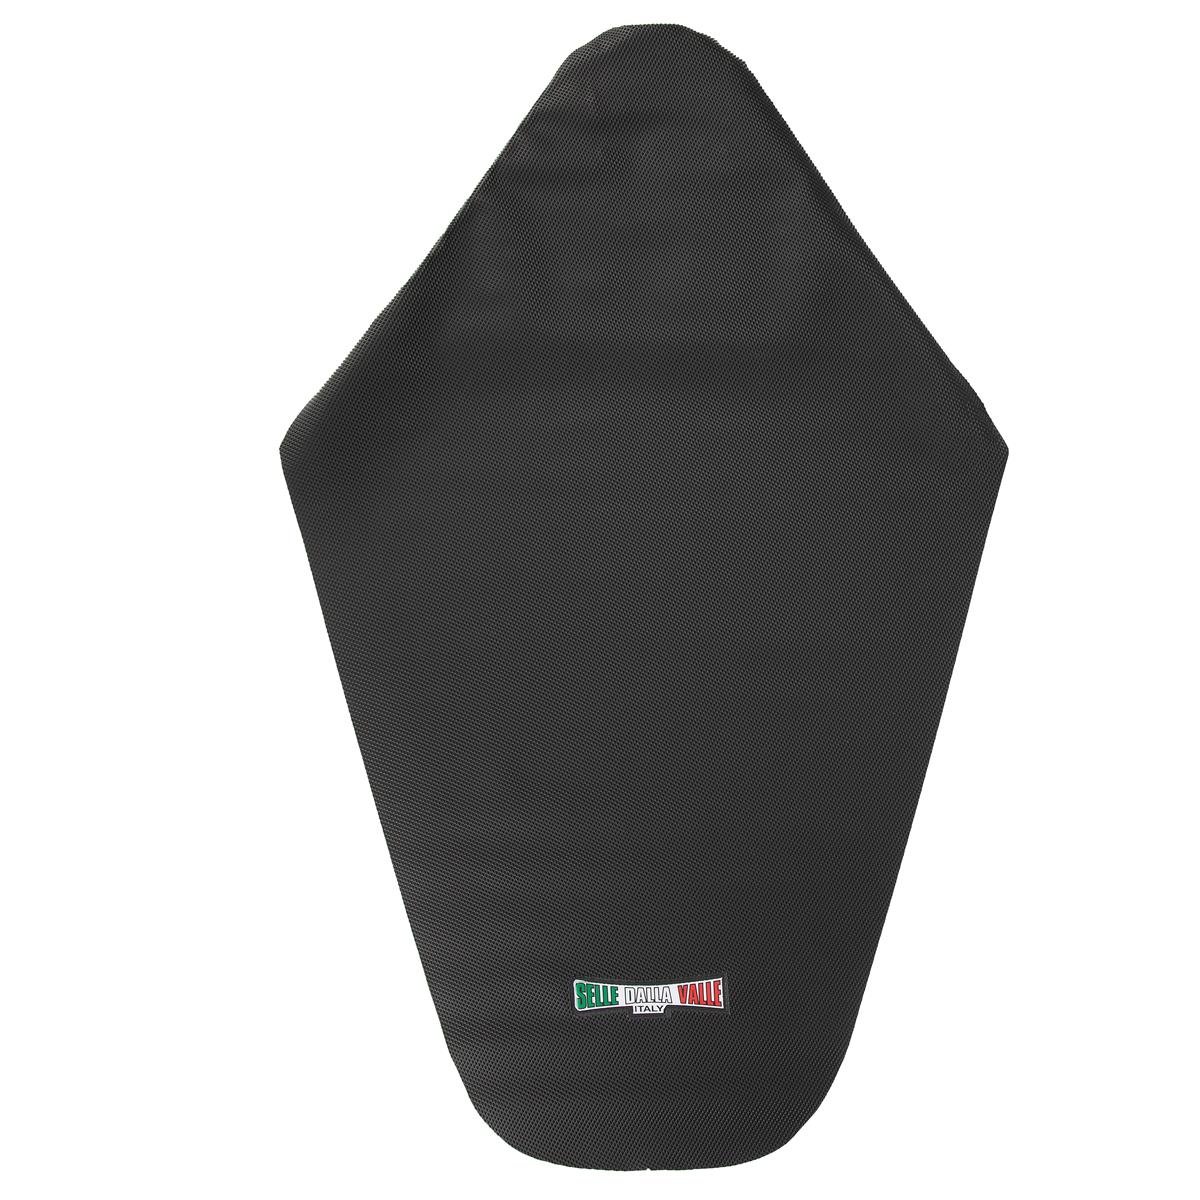 Selle Dalla Valle Seat Cover Super Grip Universal, 80 cm x 49 cm, Black